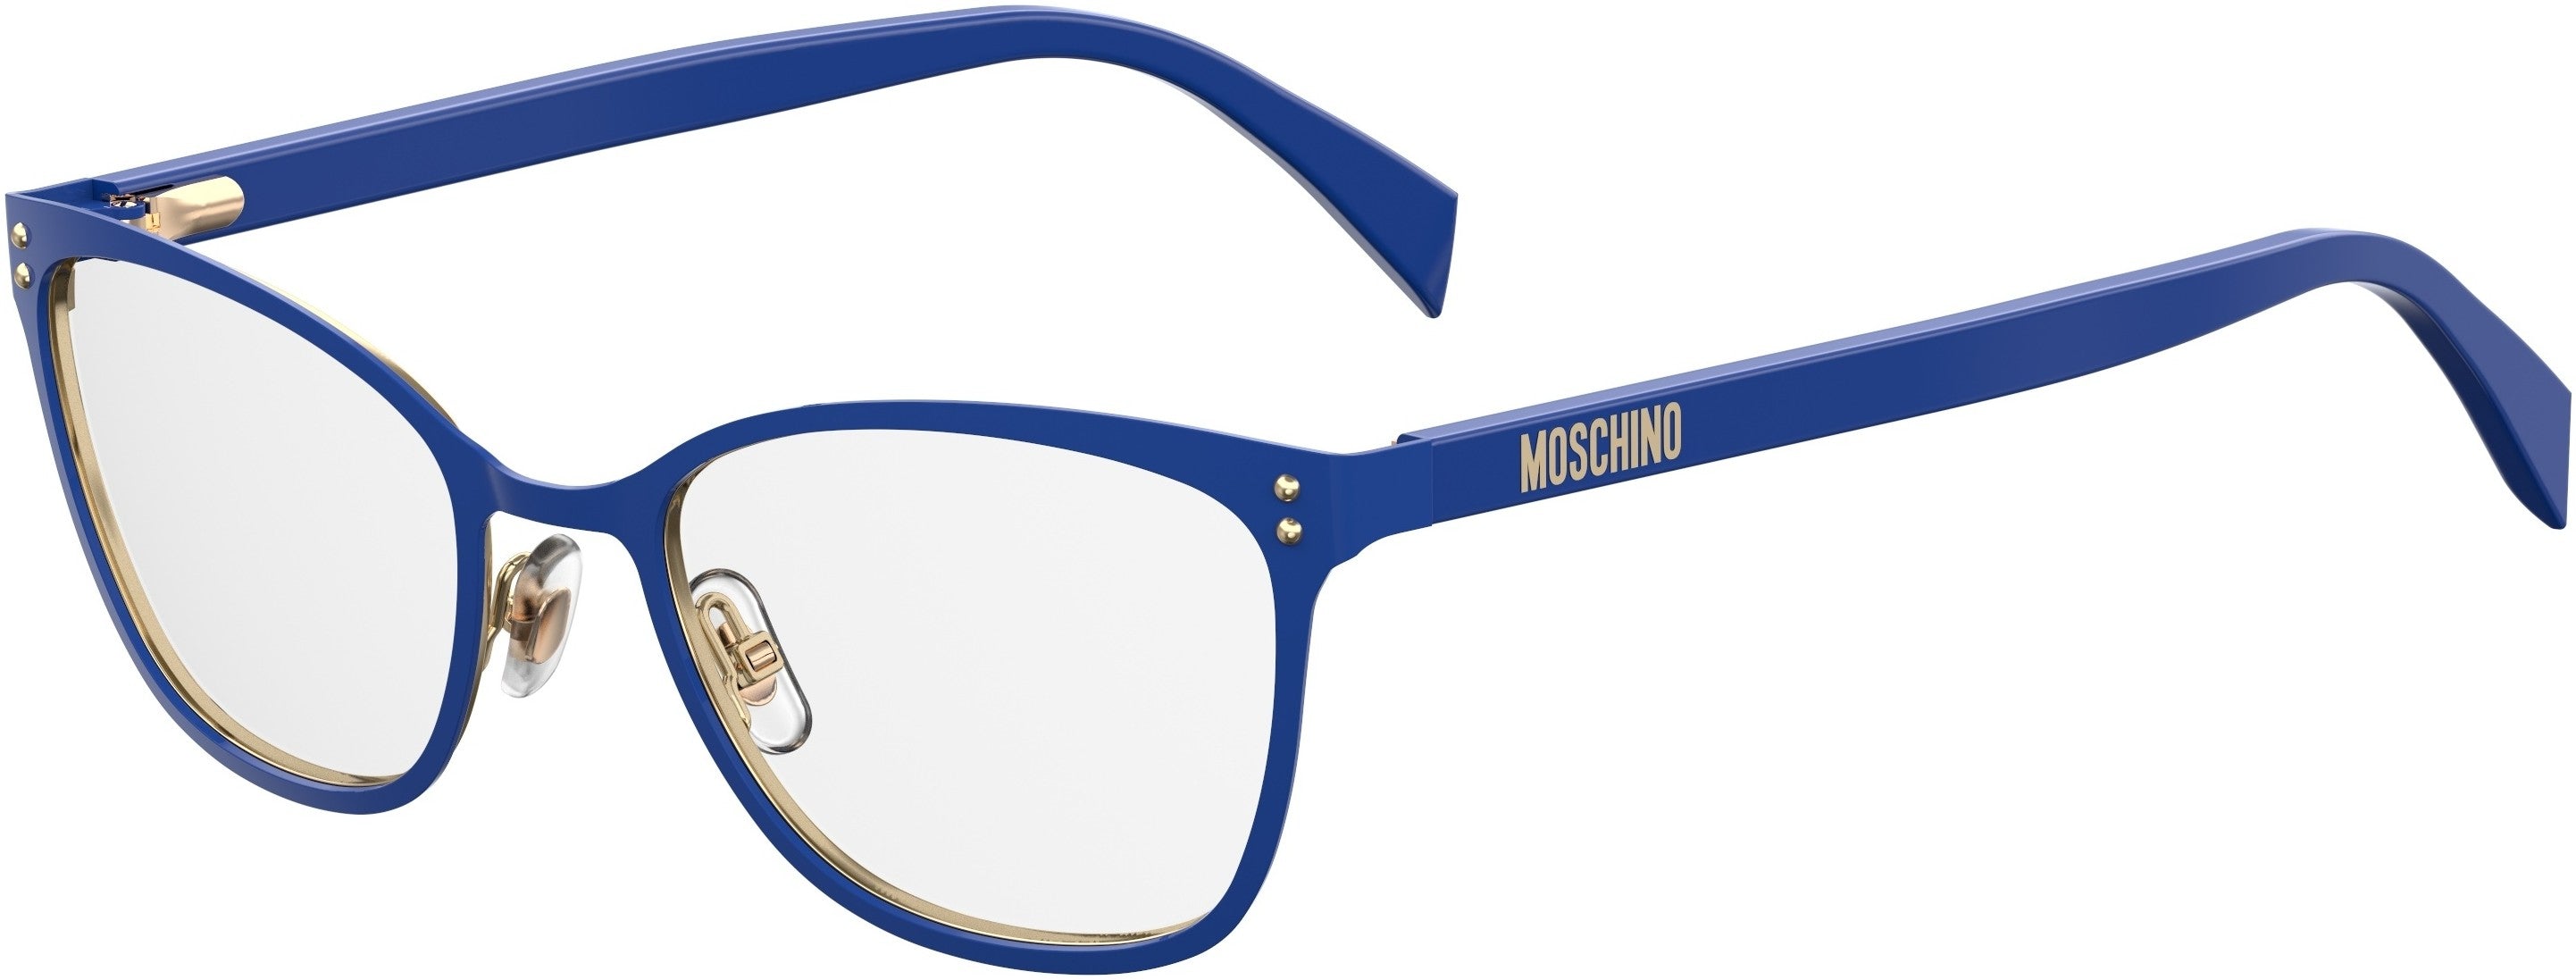  Moschino 511 Square Eyeglasses 0PJP-0PJP  Blue (00 Demo Lens)